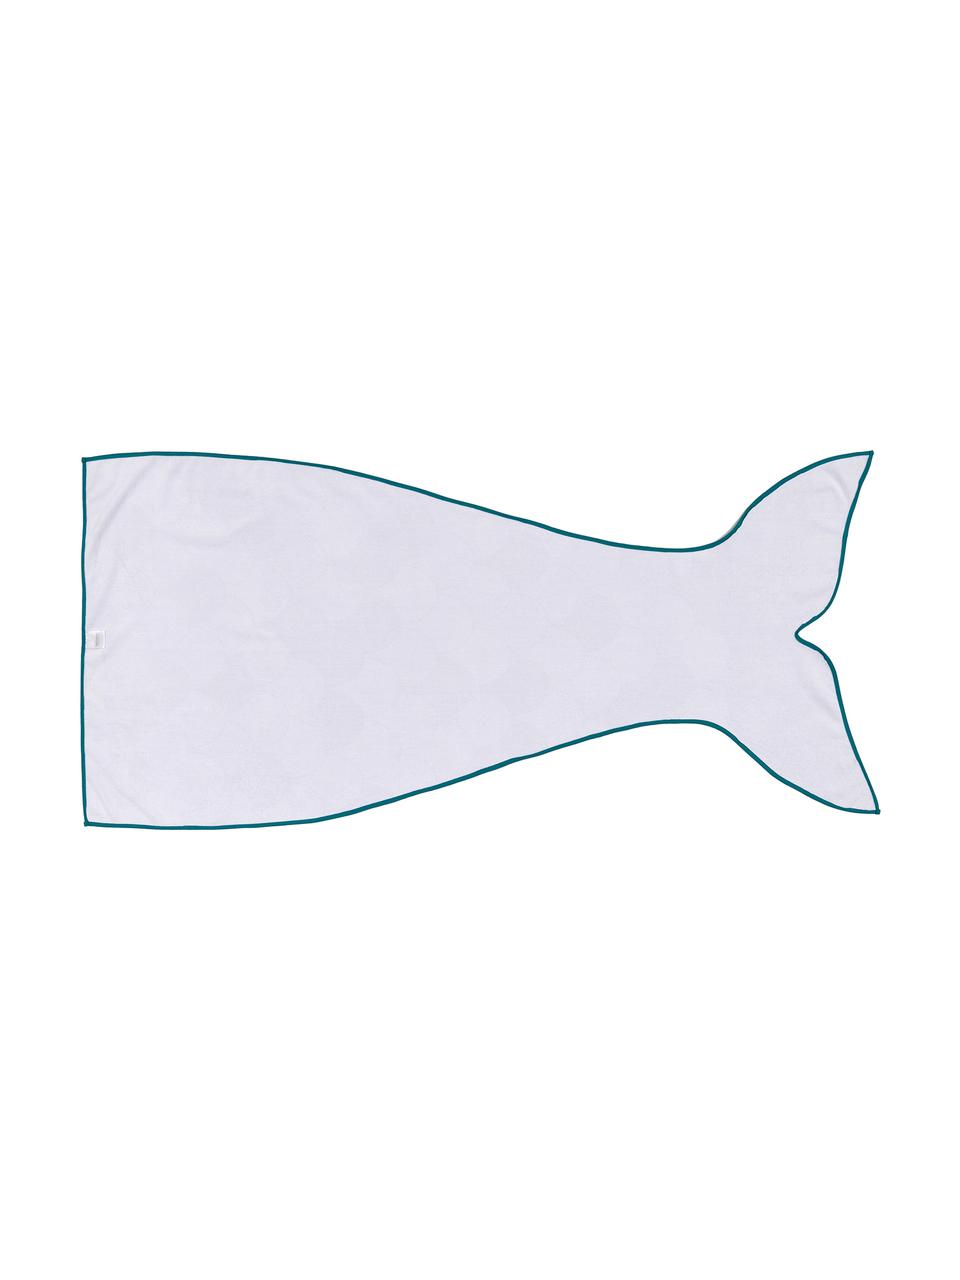 Strandlaken Mermaid, 55% polyester, 45% katoen
Zeer lichte kwaliteit 340 g/m², Lichtblauw, turquoise, wit, 87 x 180 cm